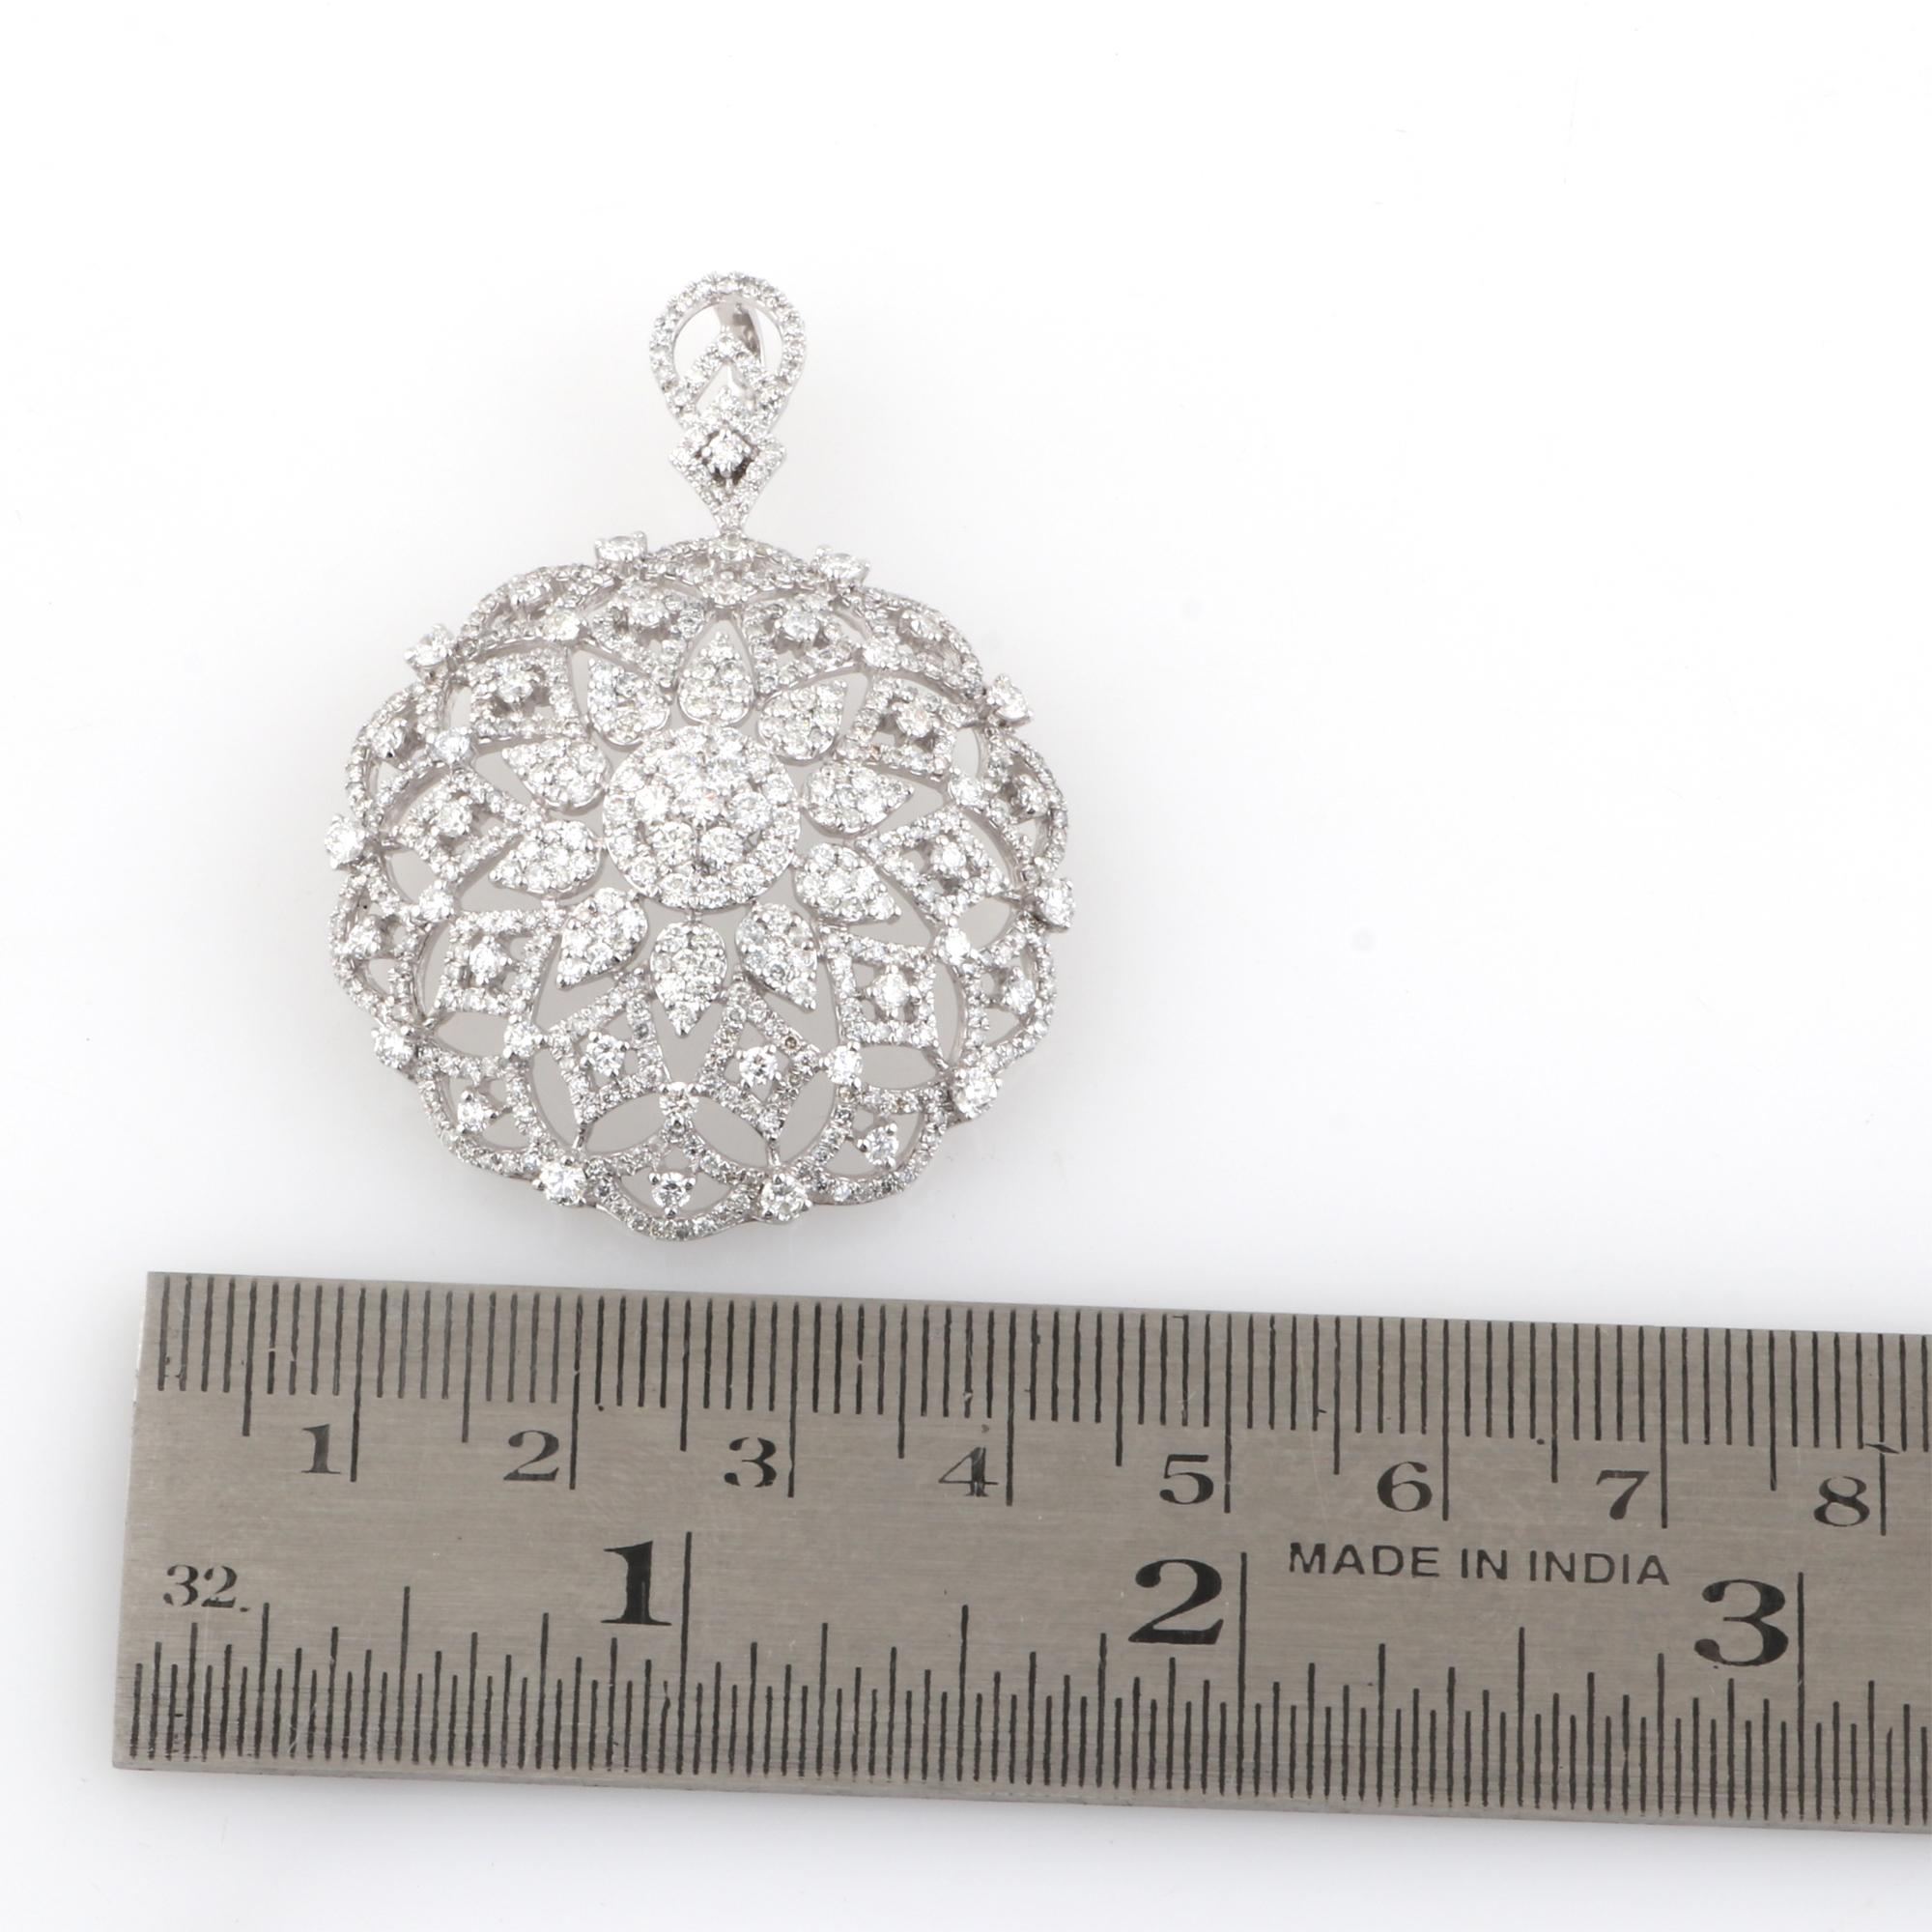 Round Cut 3.65 Carat Diamond Flower Design Pendant 10 Karat White Gold Handmade Jewelry For Sale